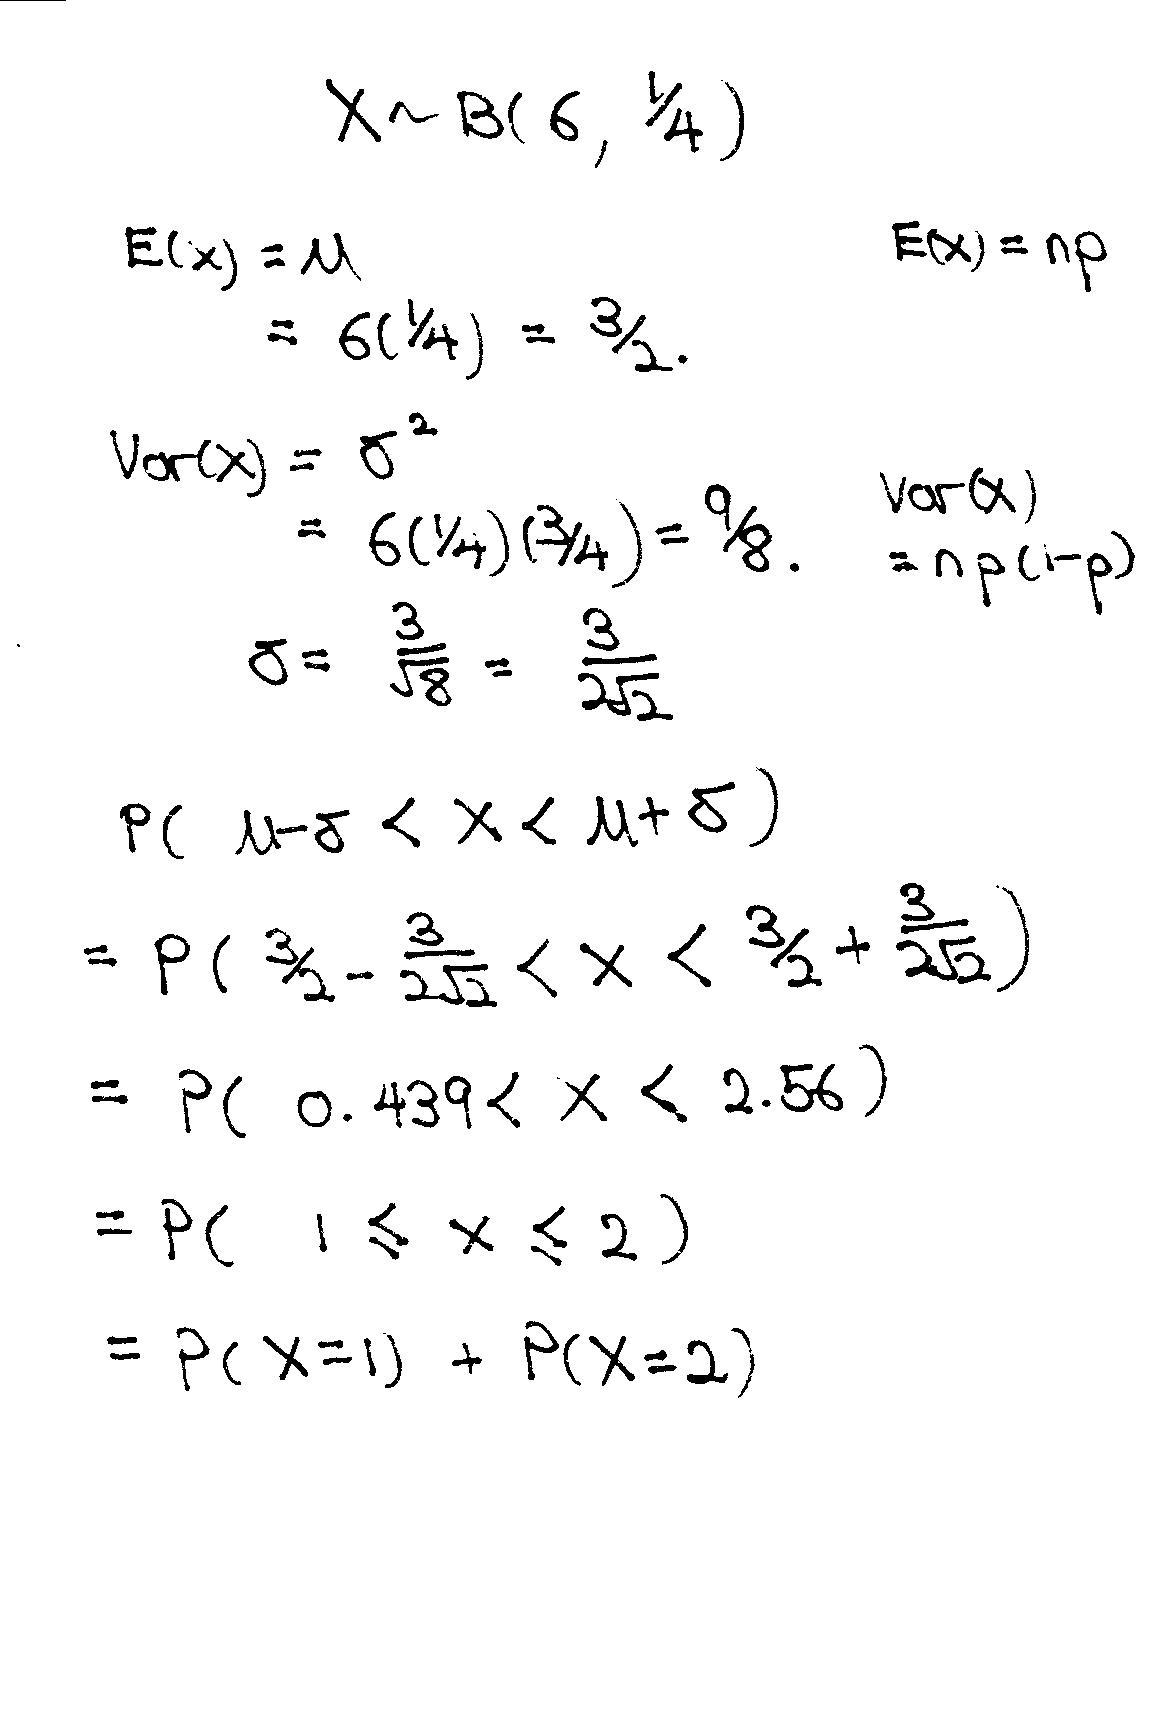 binomial-distribution.png